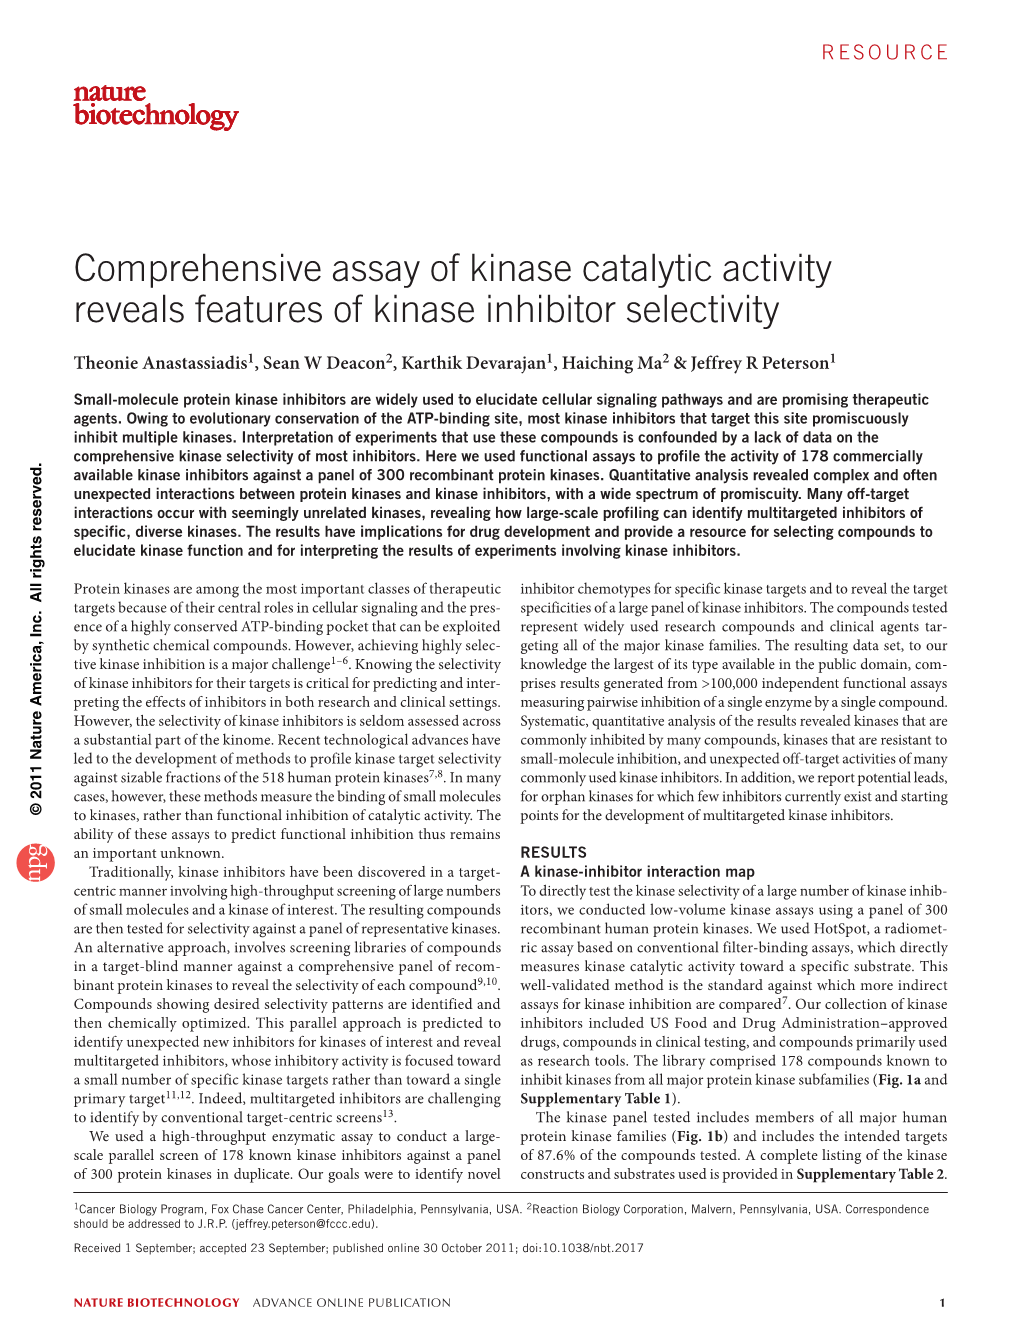 Comprehensive Assay of Kinase Catalytic Activity Reveals Features Of